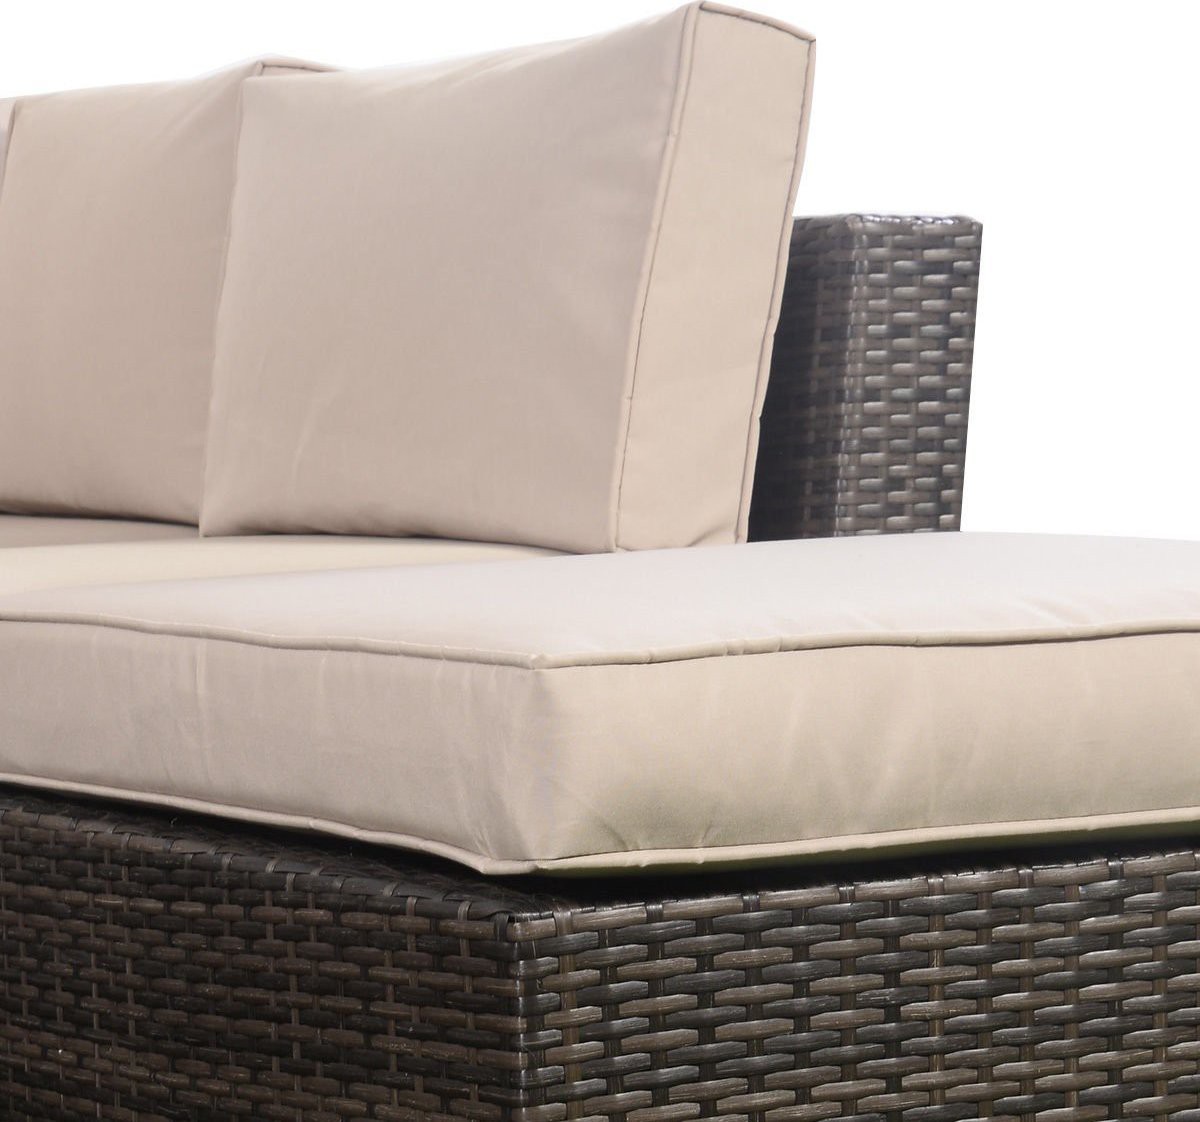 Giantex 4pc Wicker Rattan Outdoor Sectional Sofa Set